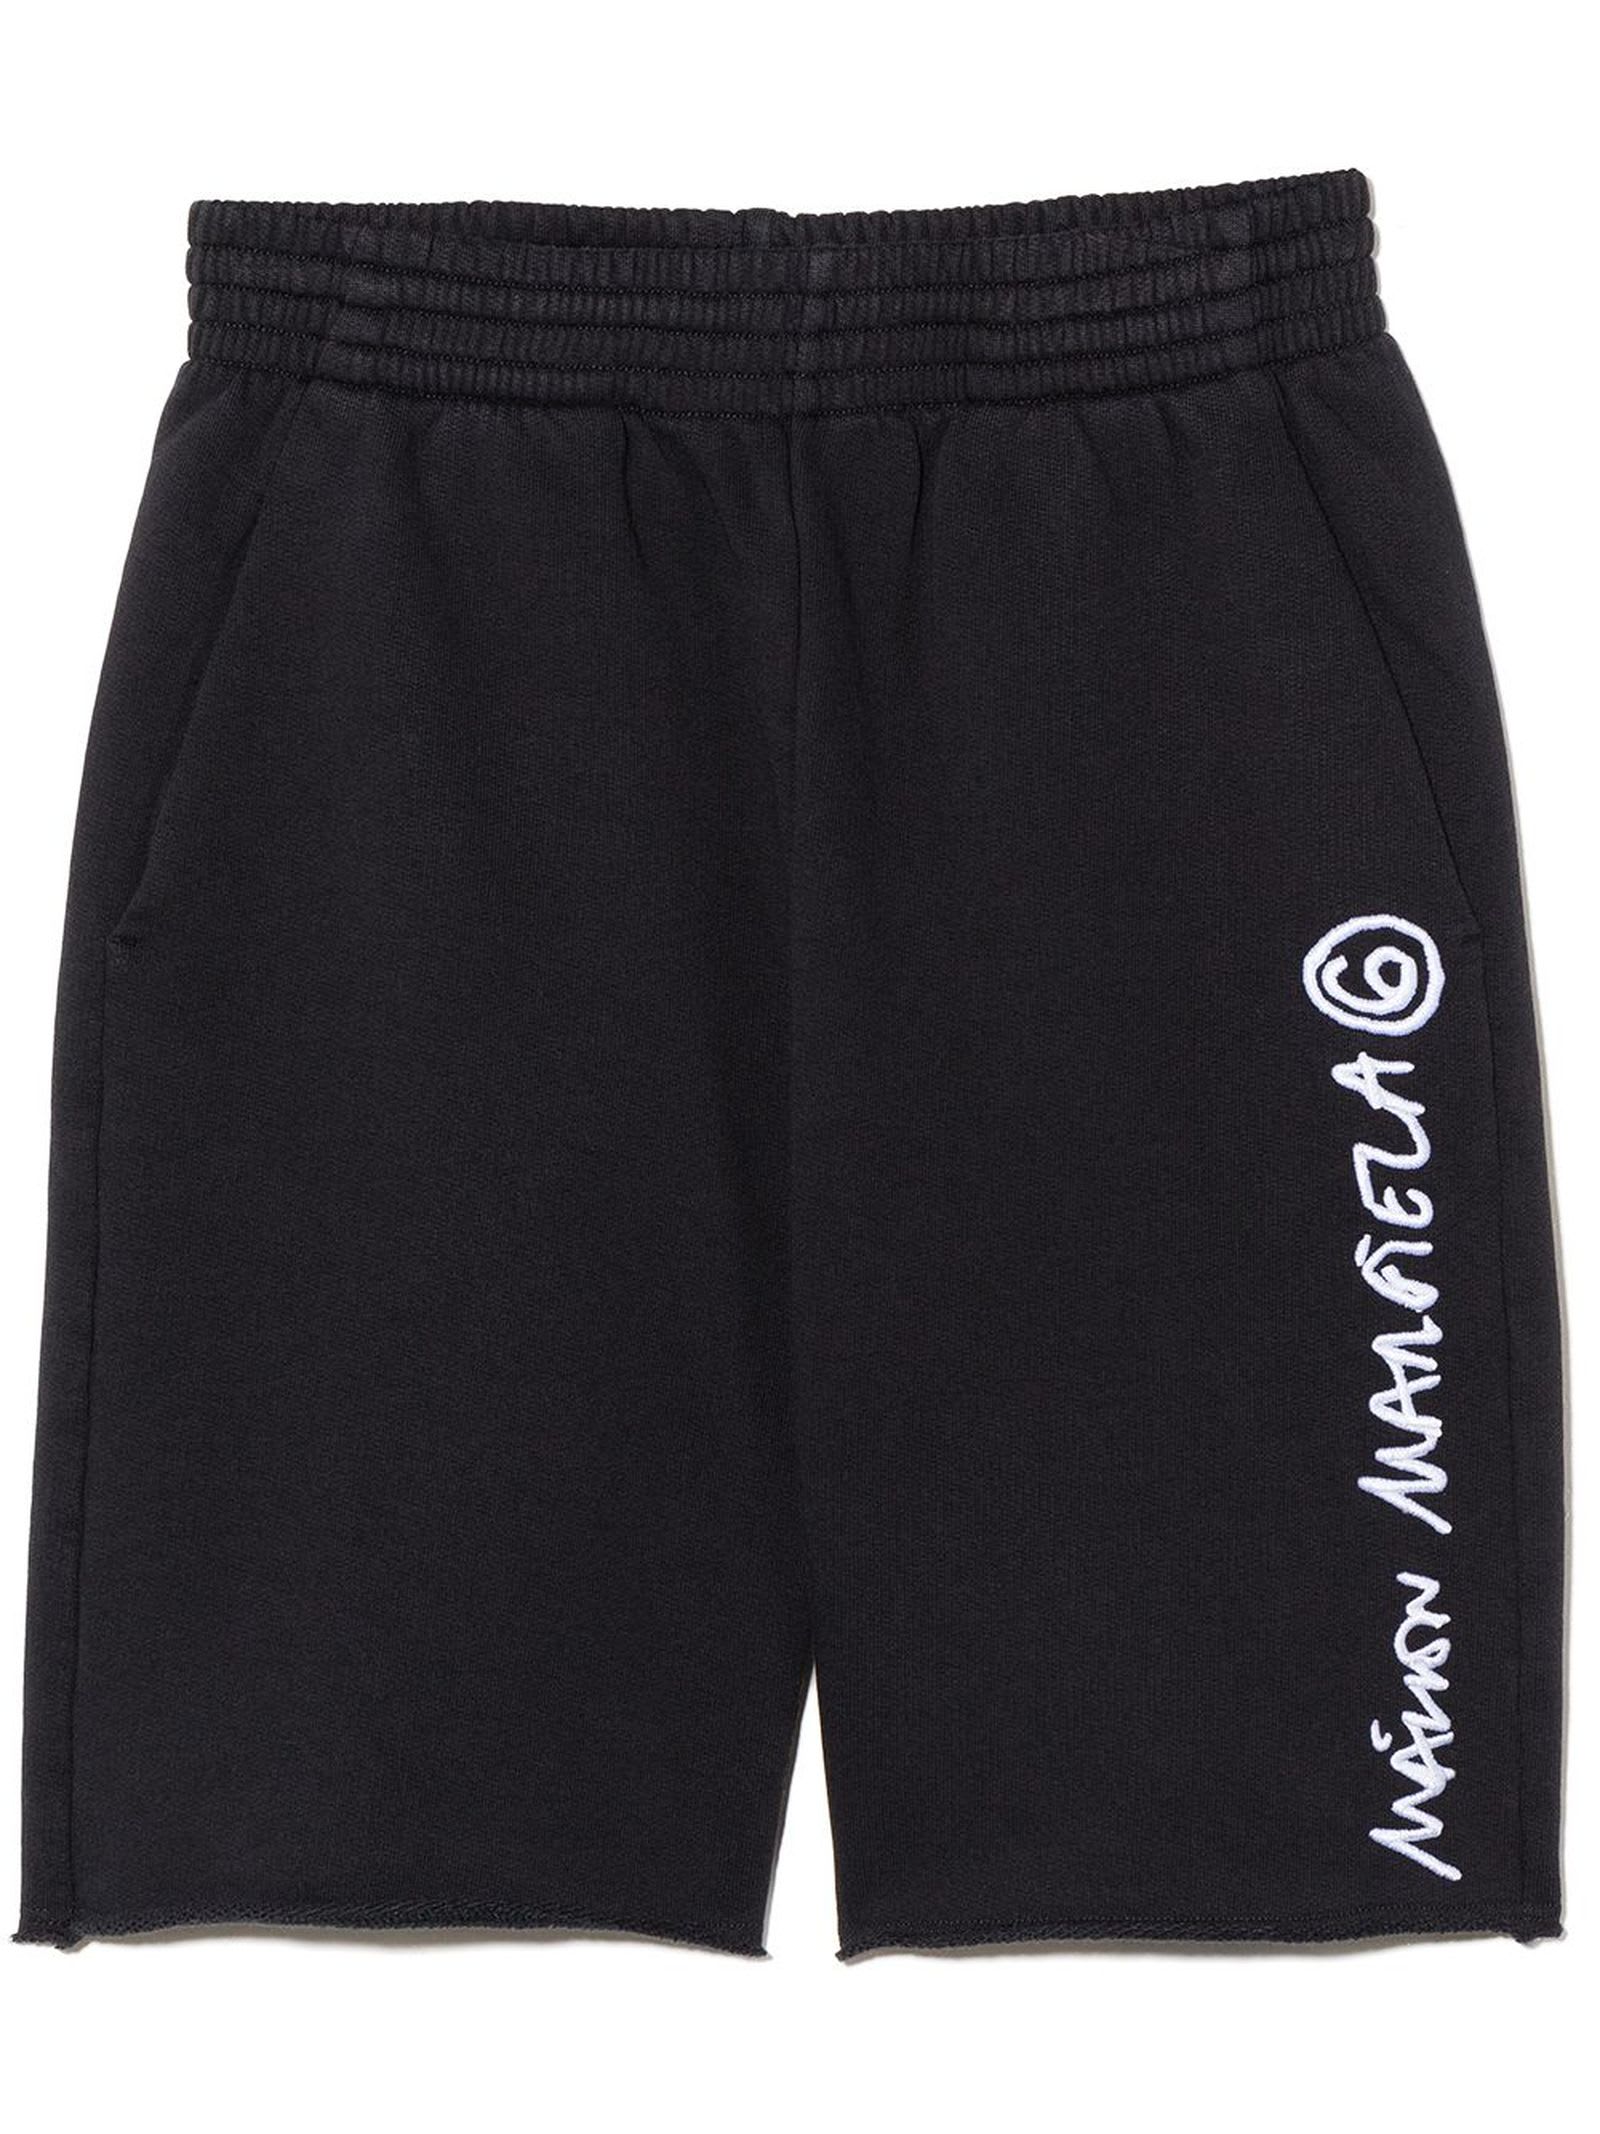 Maison Margiela Black Cotton Shorts